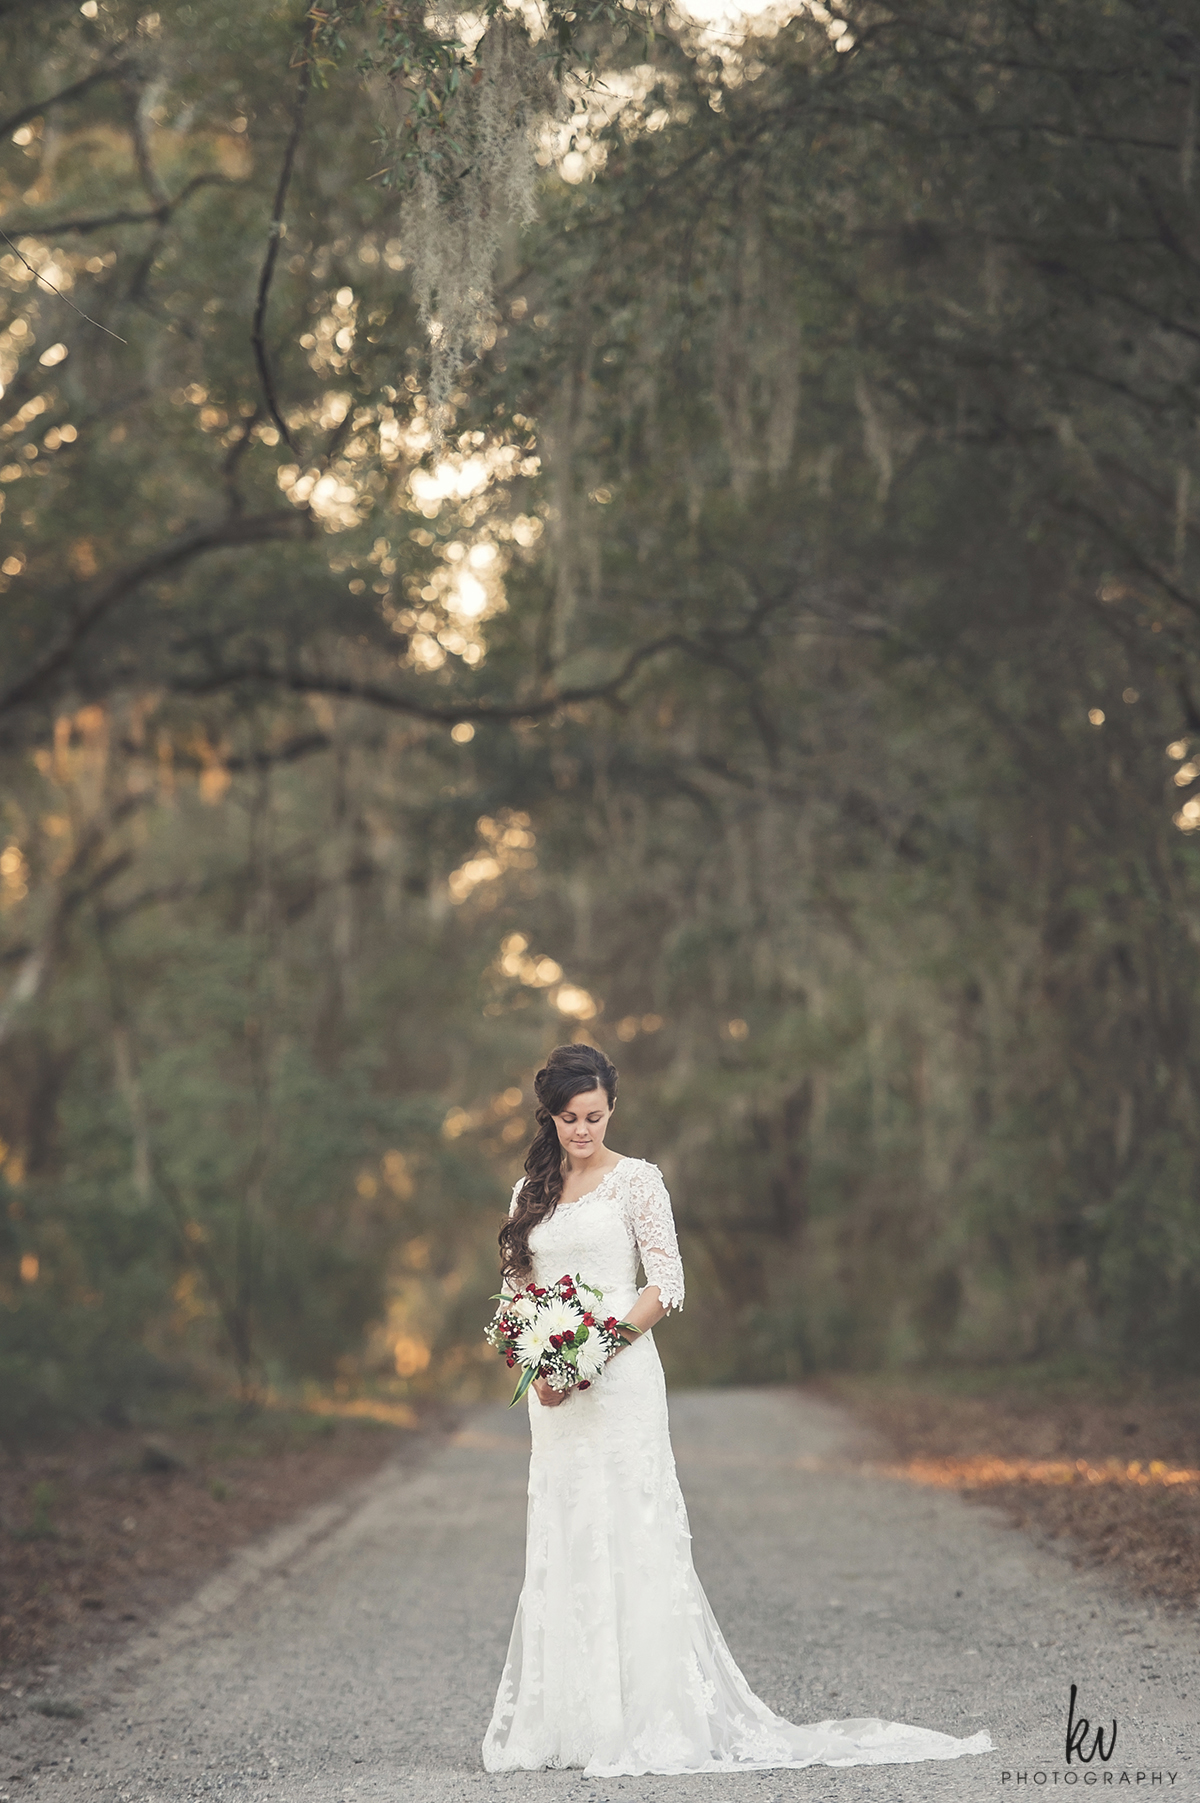 Rustic Wedding by Orlando wedding photographers KV